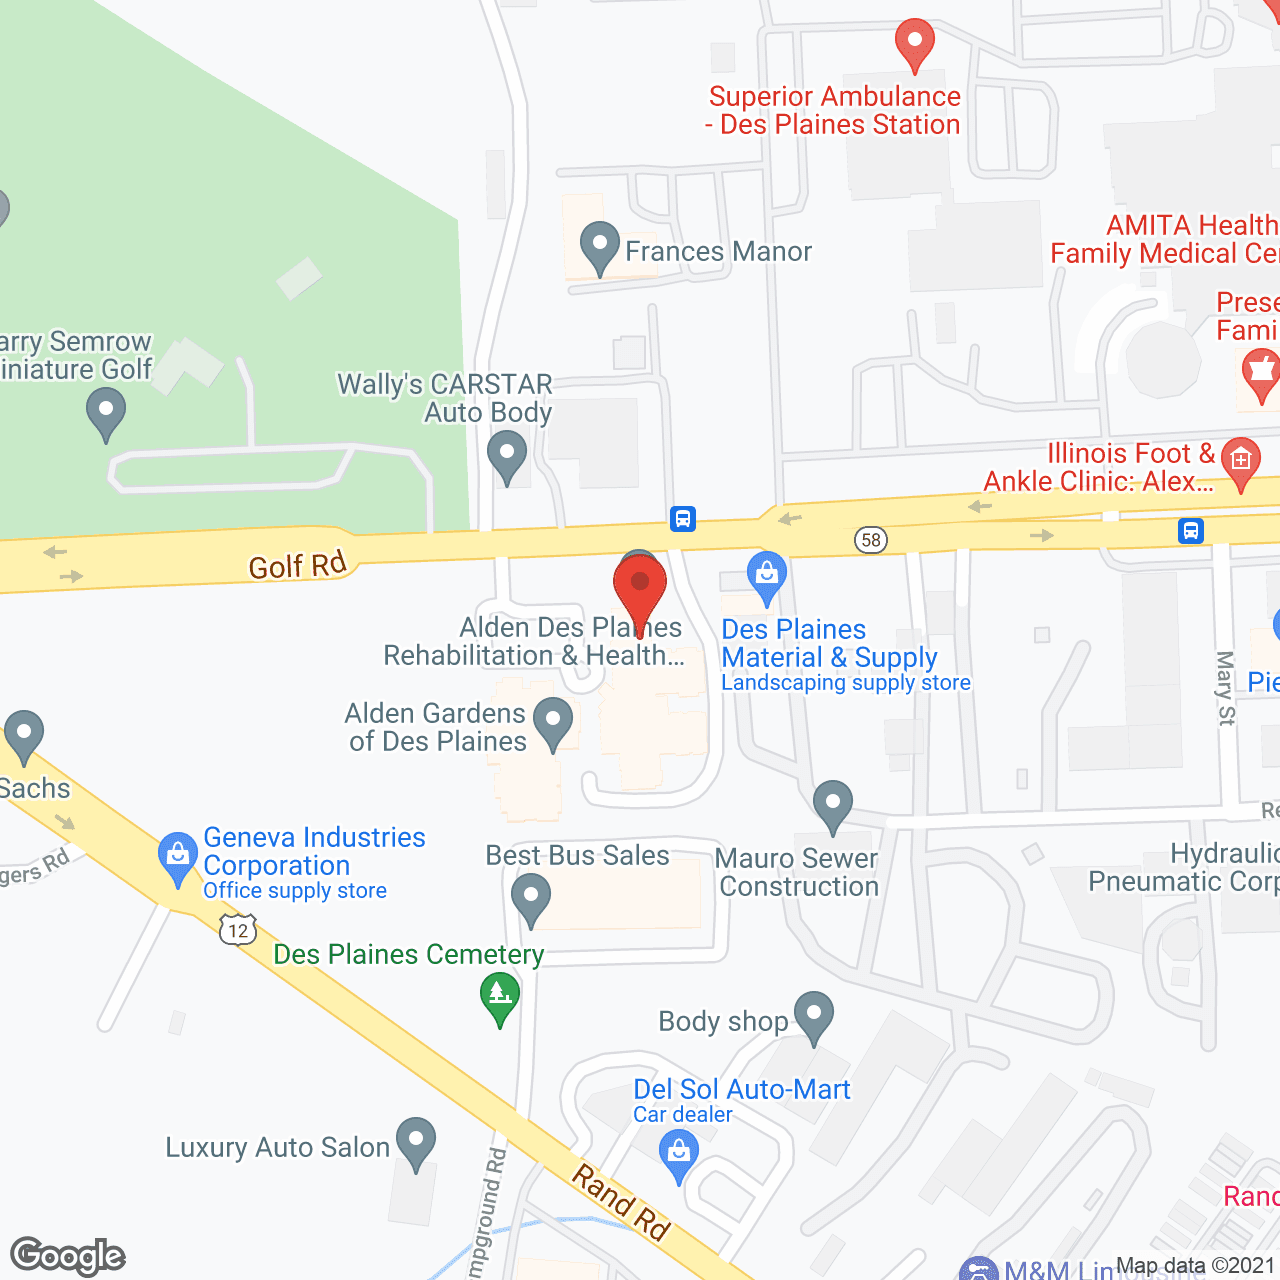 Alden Des Plaines in google map